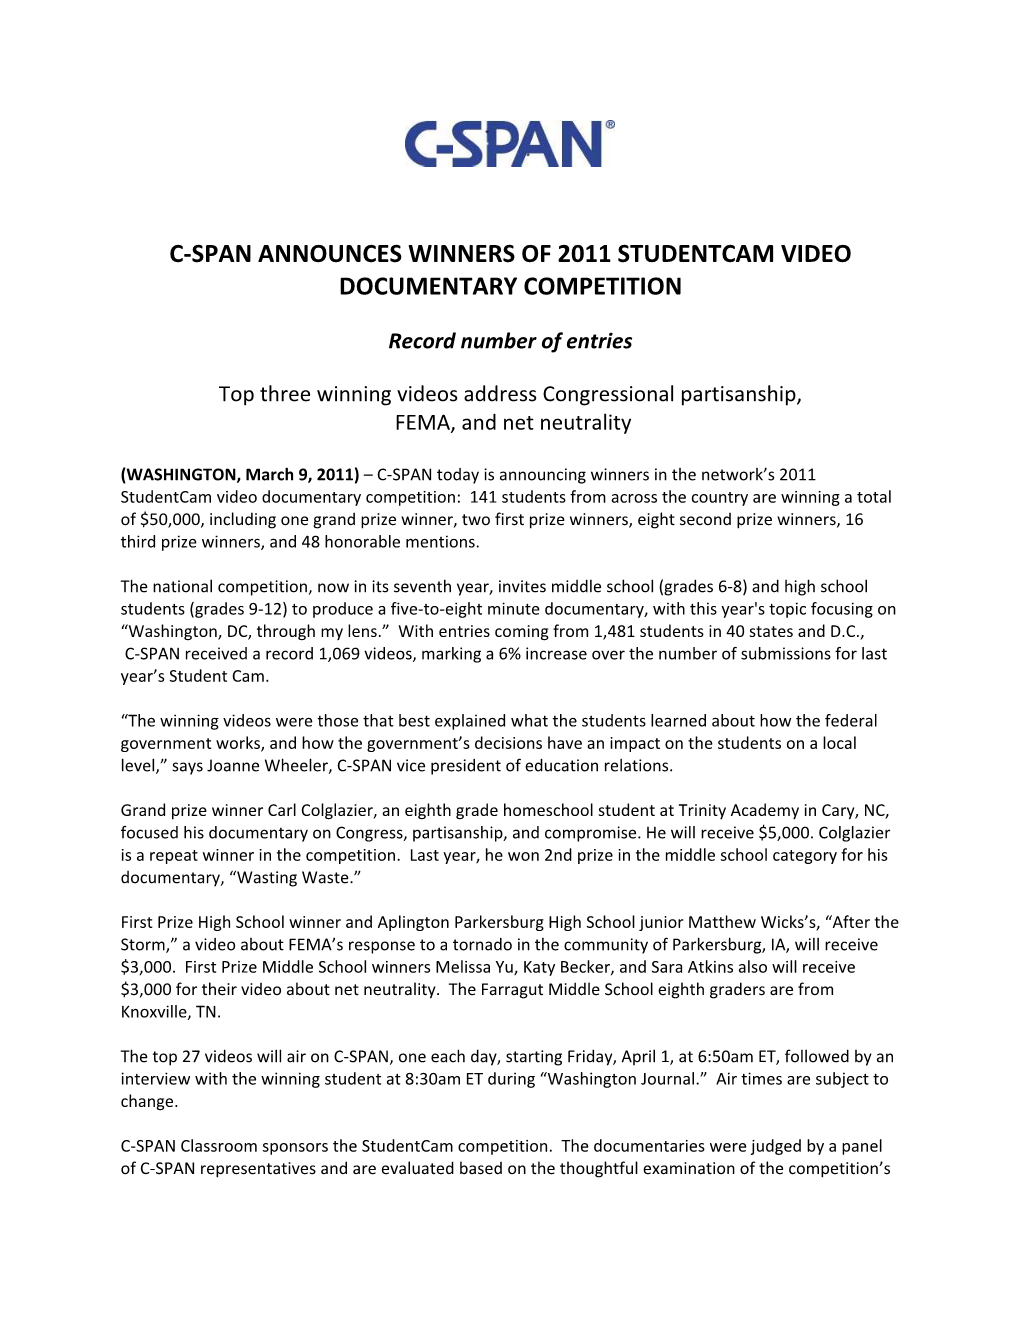 C-Span Announces Winners of 2011 Studentcam Video